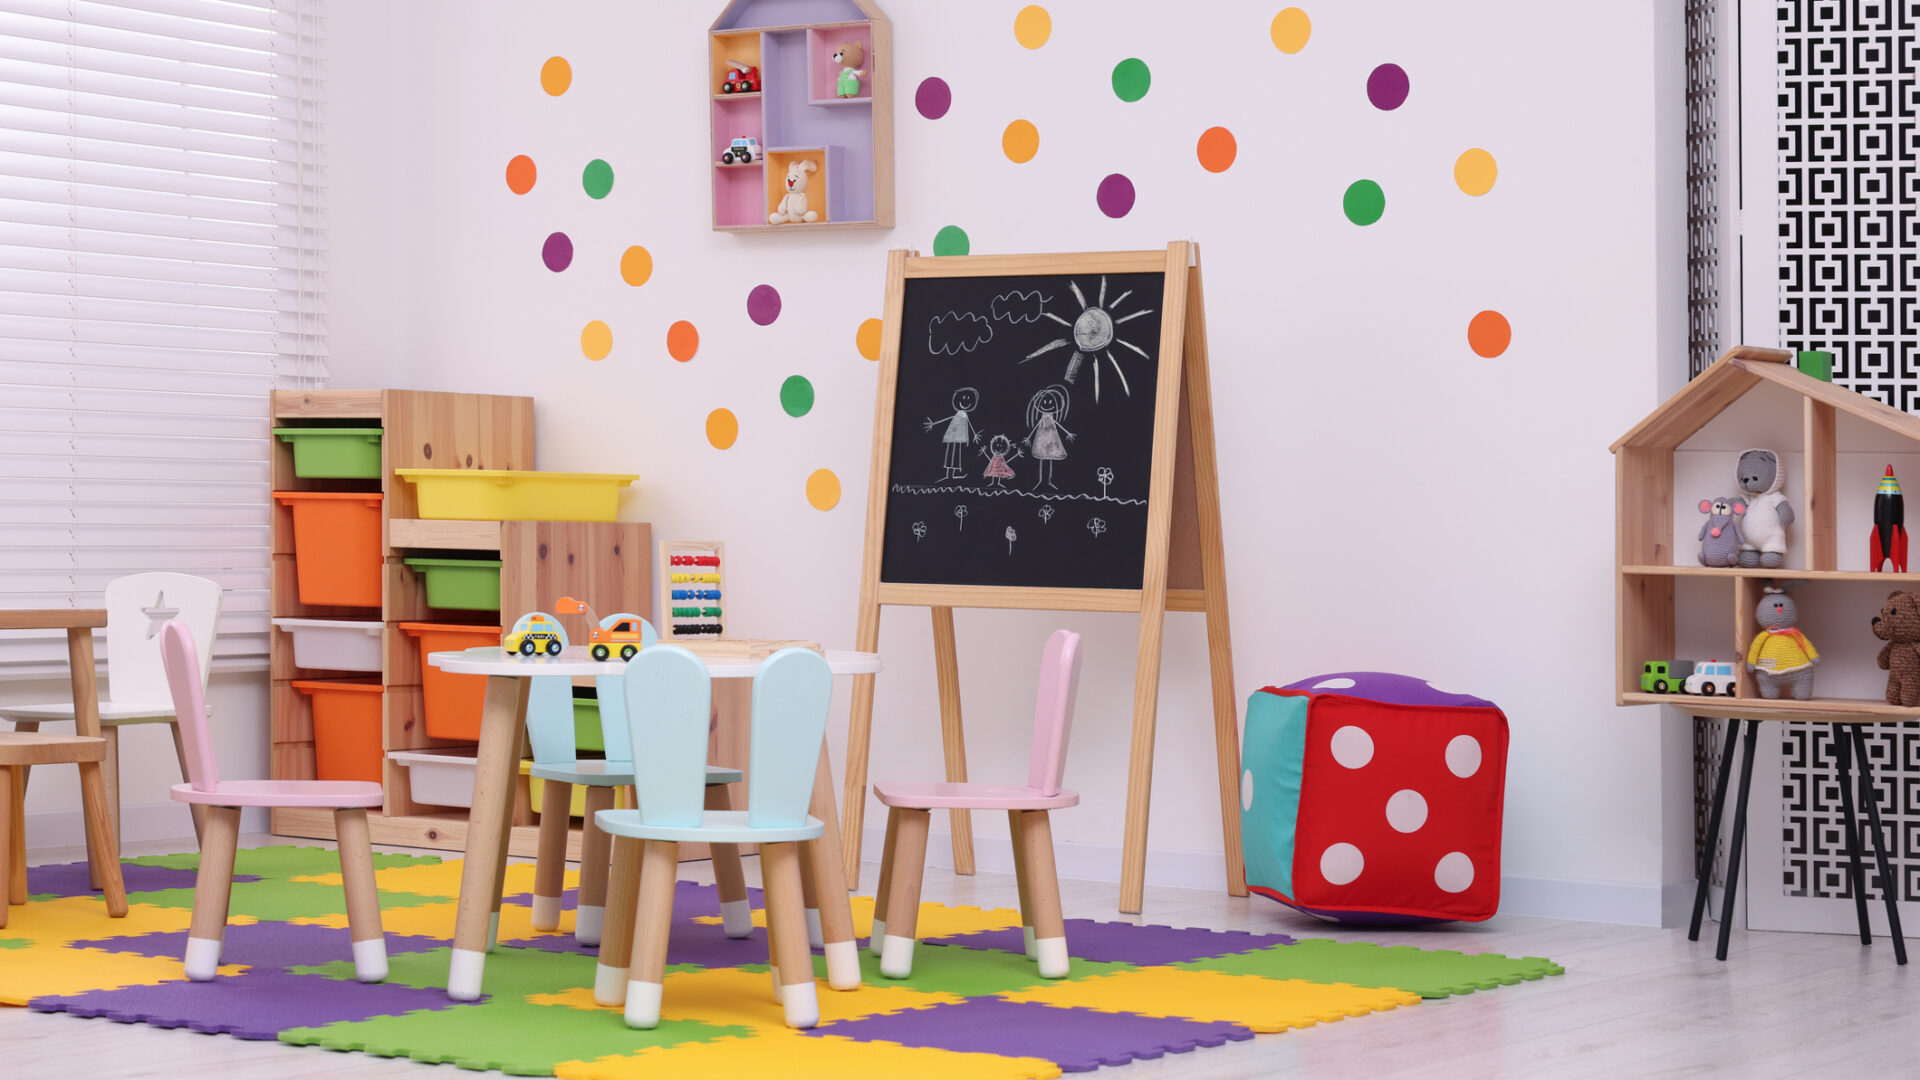 Stylish kindergarten interior with toys and modern furniture